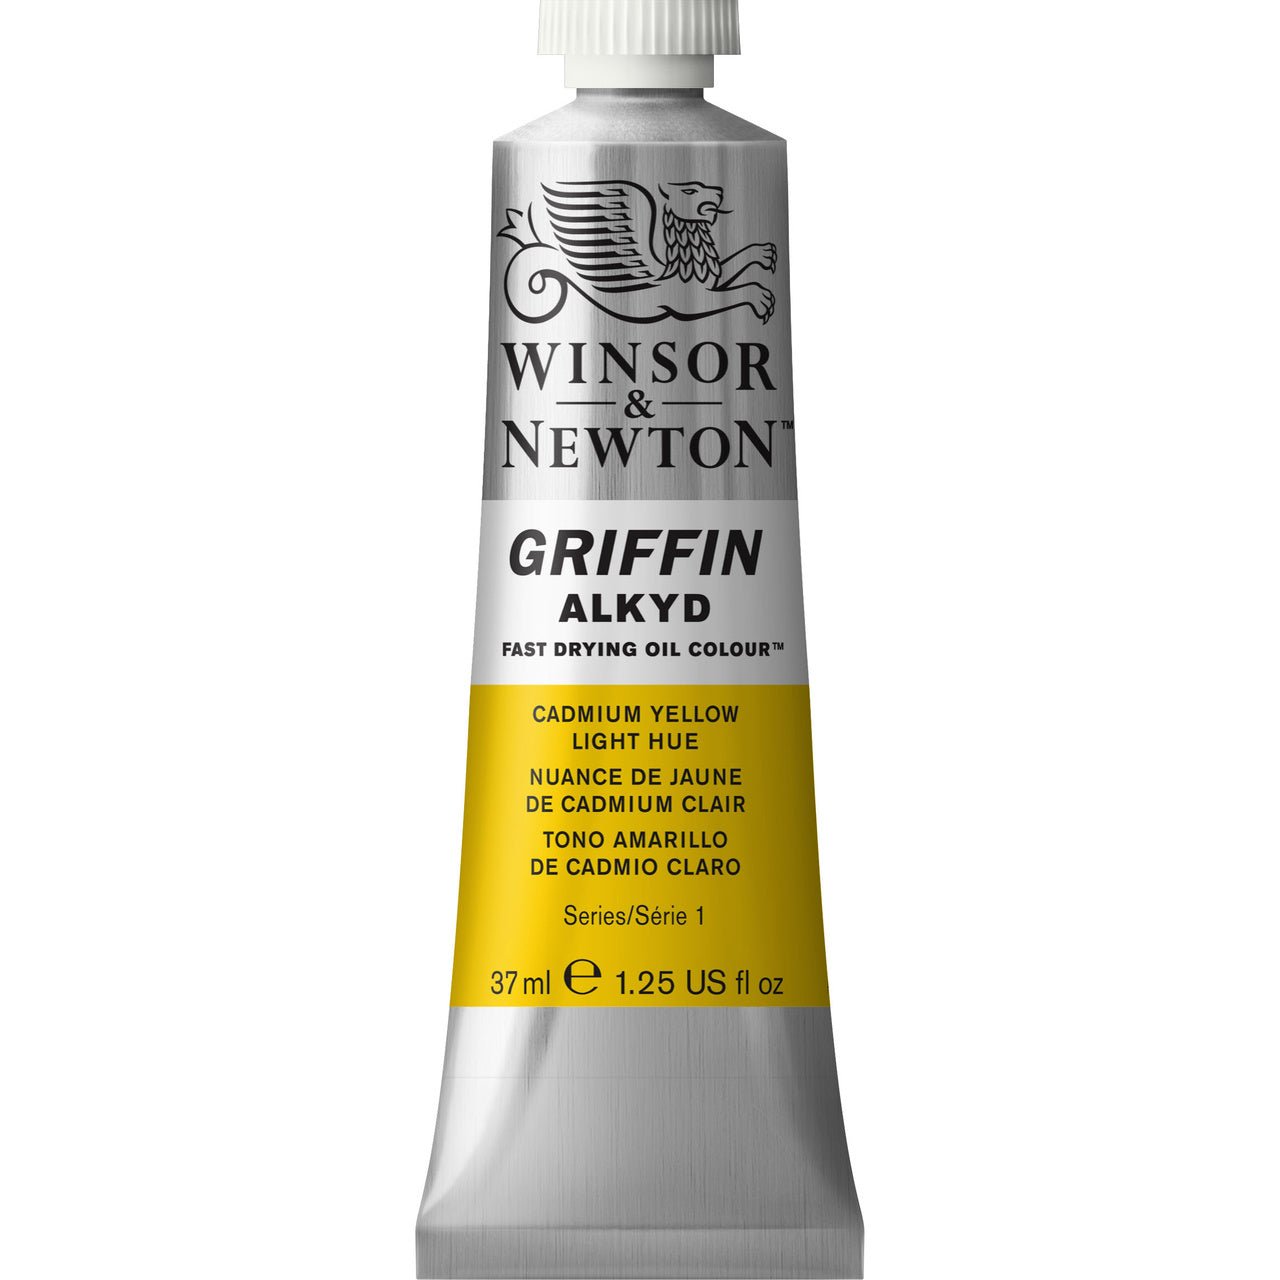 Winsor & Newton Griffin Alkyd 37ml Cadmium Yellow Light Hue - merriartist.com